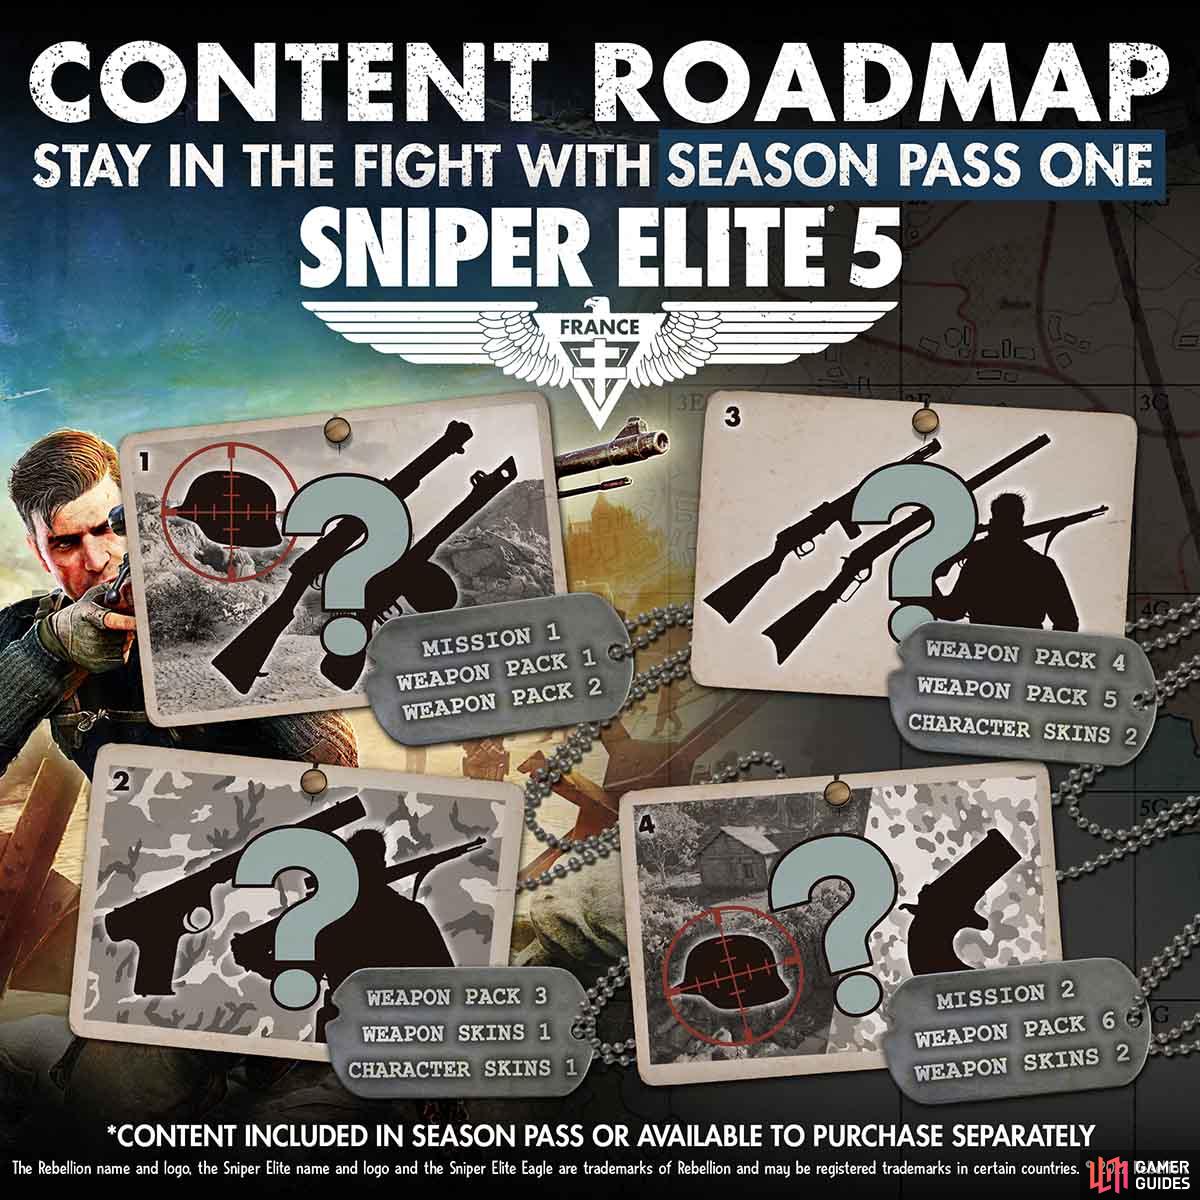 The Sniper Elite 5 Season Pass roadmap - image courtesy of Rebellion.